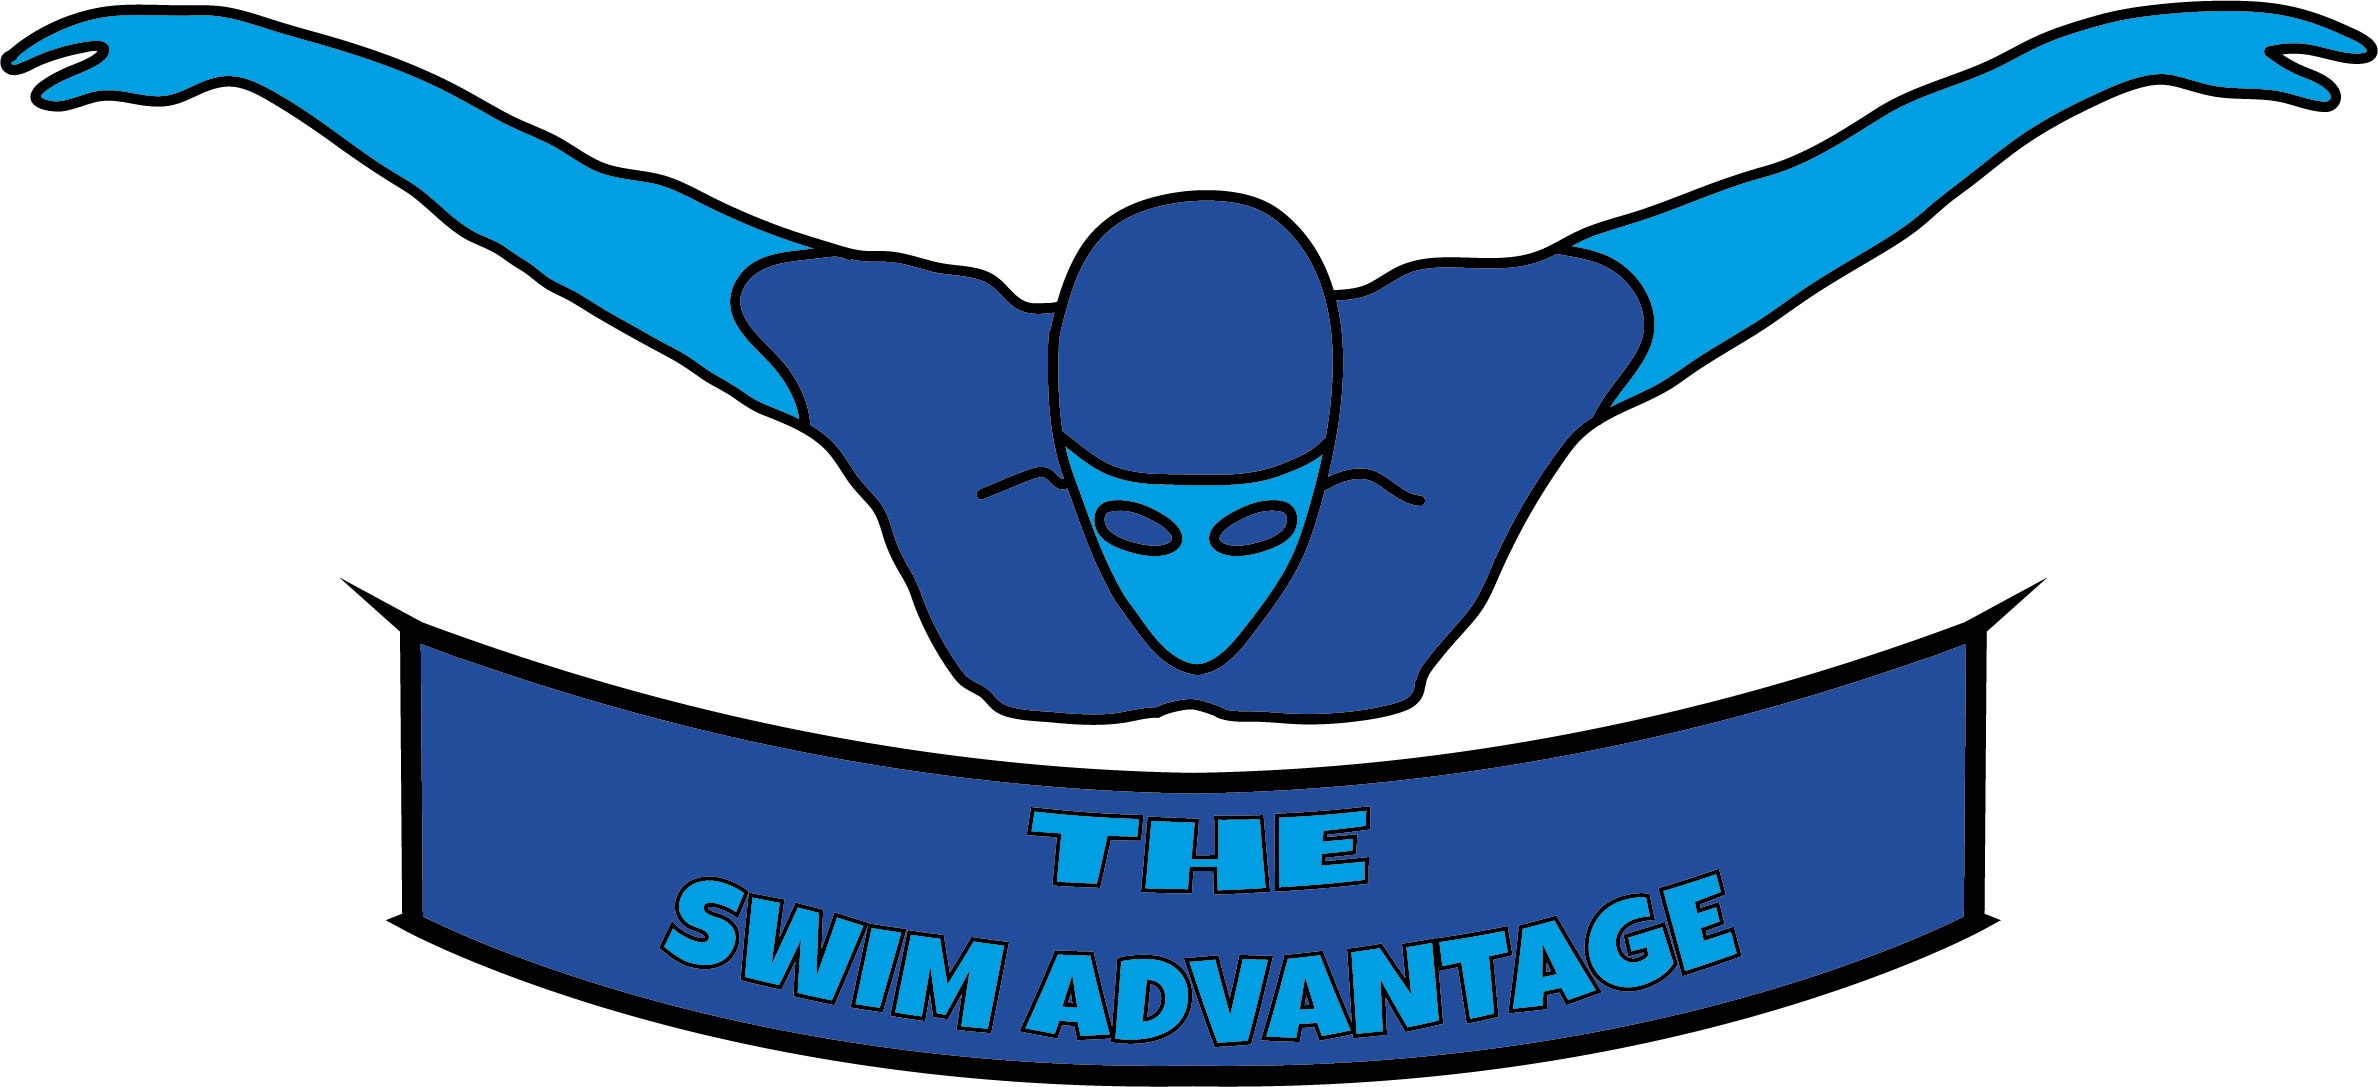 Logo Design entry 2151408 submitted by arfiantoputra13 to the Logo Design for The Swim Advantage.com run by dri$1170